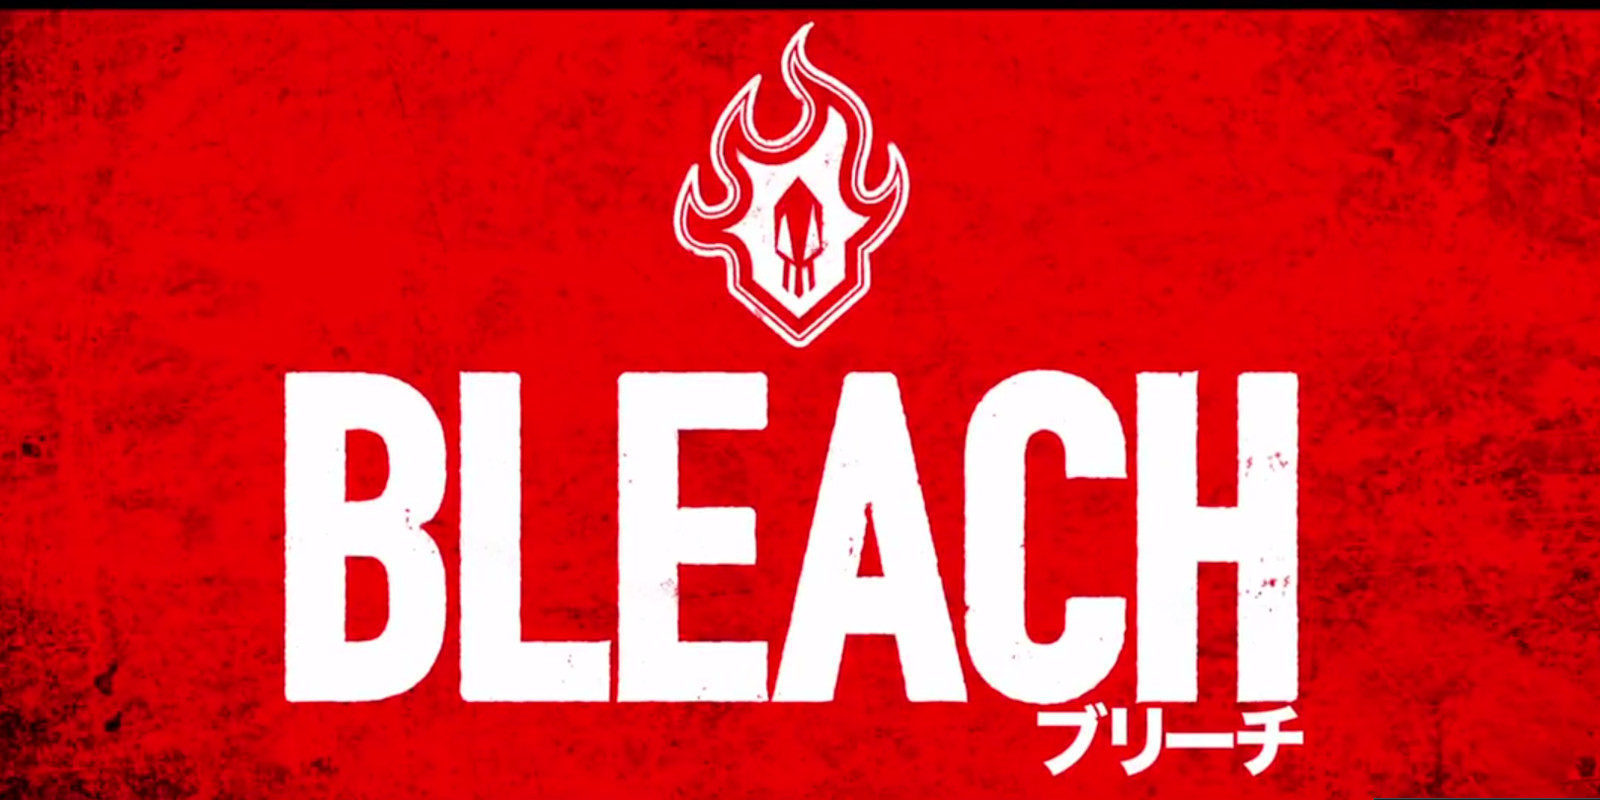 La película de imagen real de 'Bleach' estrena teaser